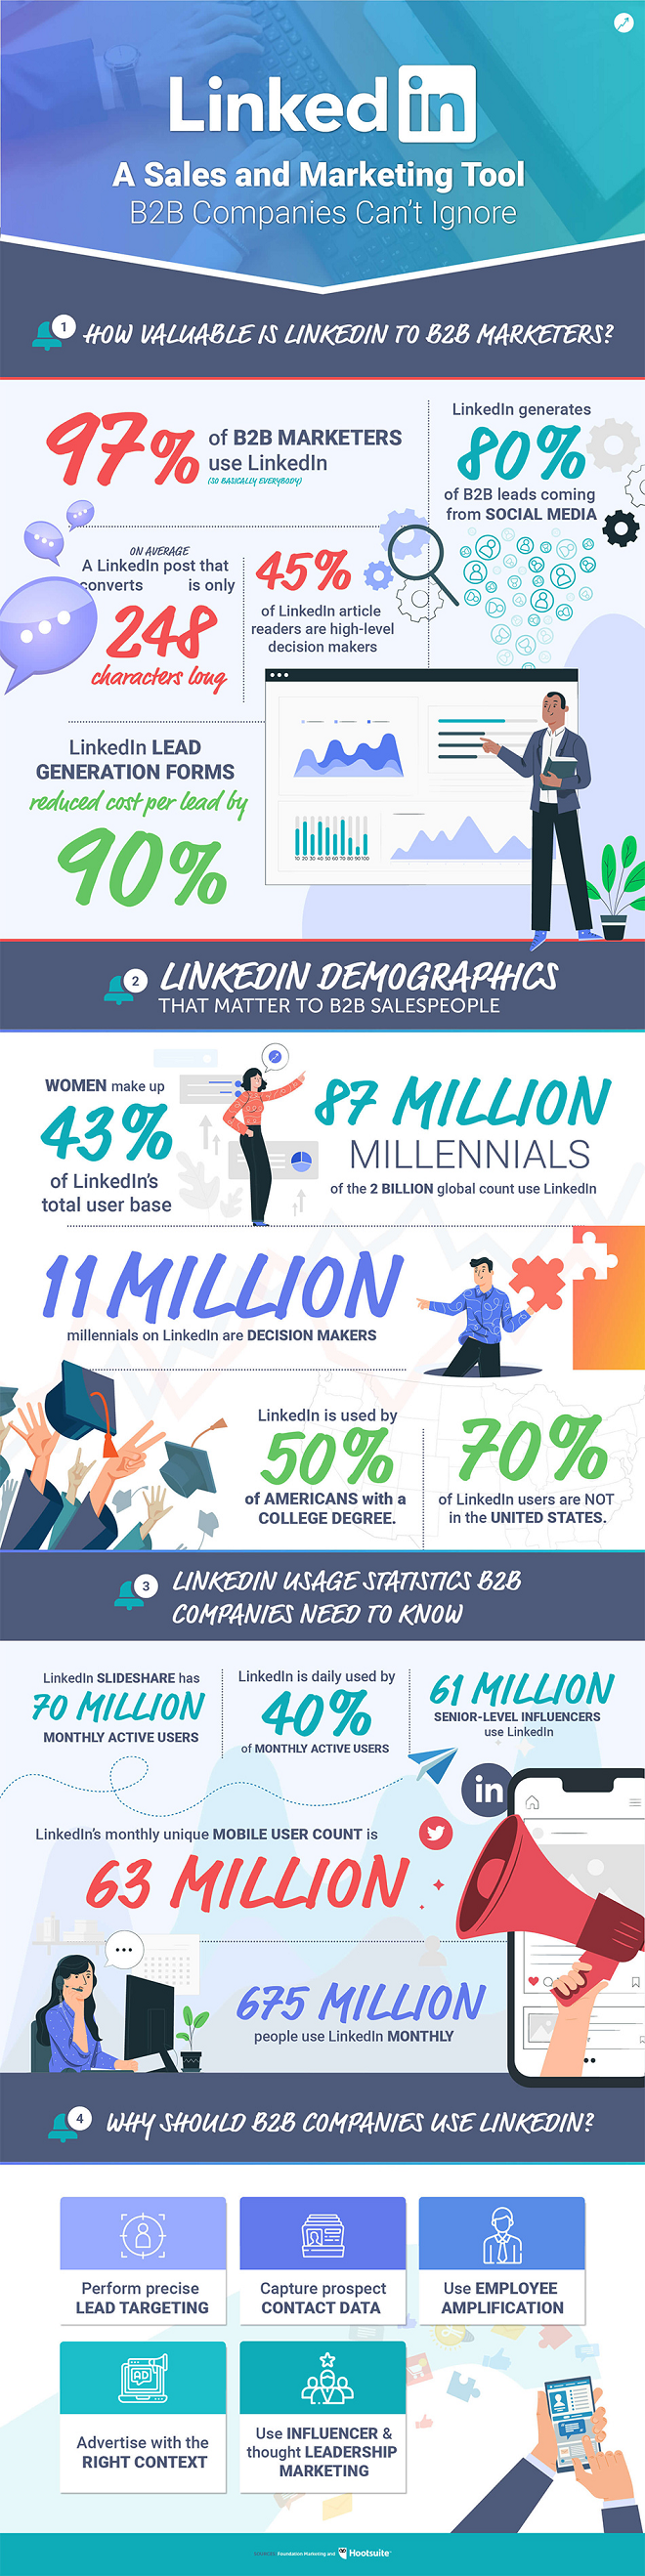 Linkedin Infographic2